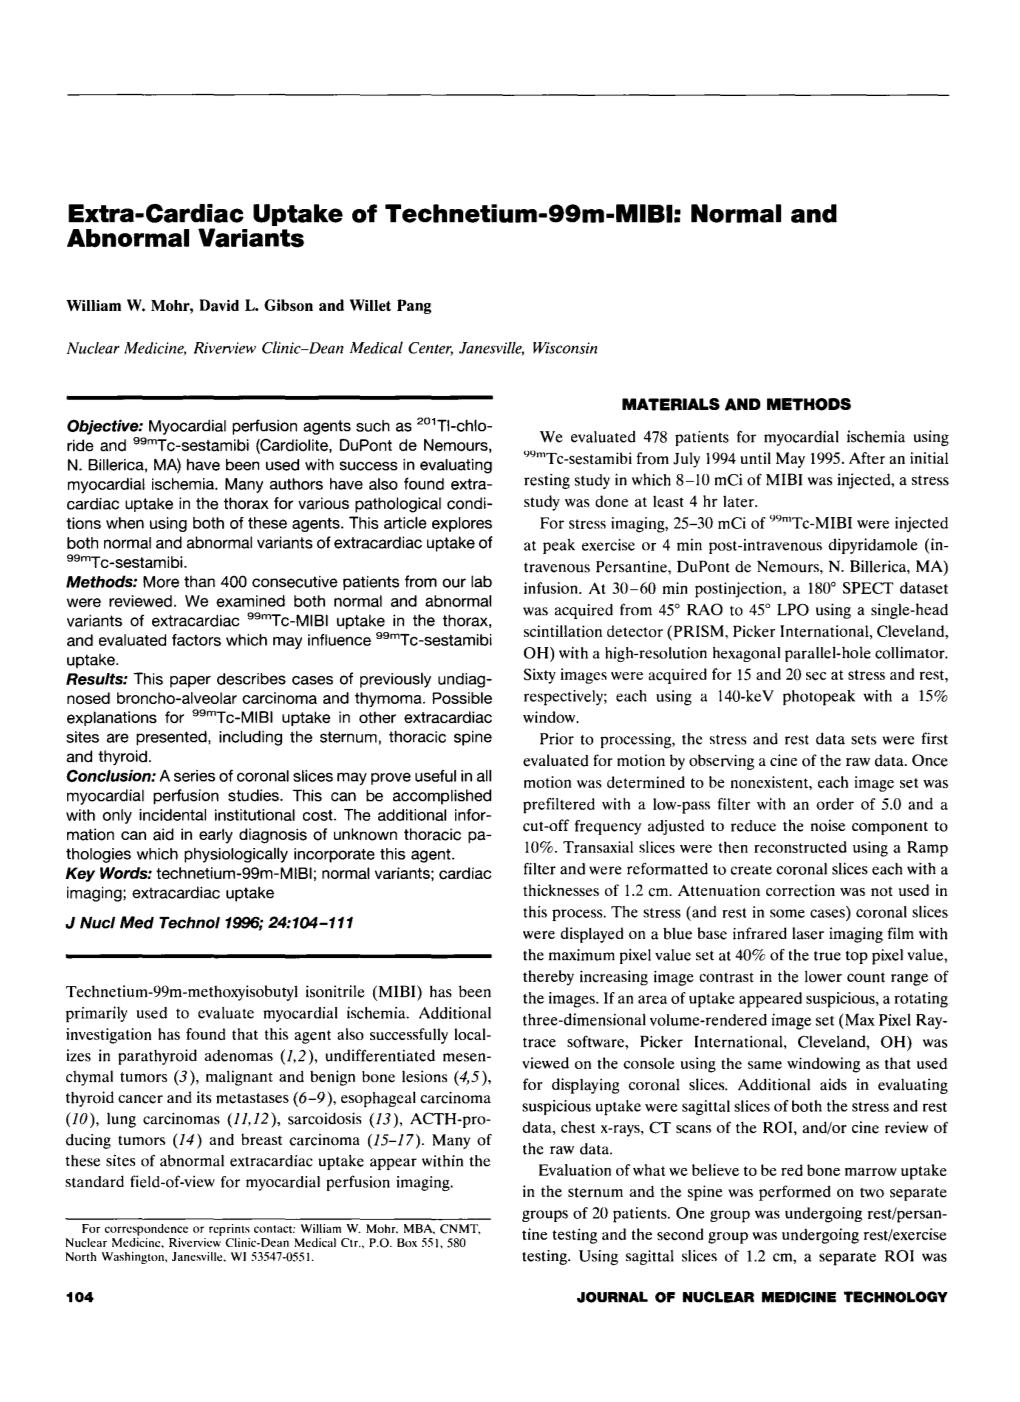 Extra-Cardiac Uptake of Technetium-99M-MIBI: Normal and Abnormal Variants